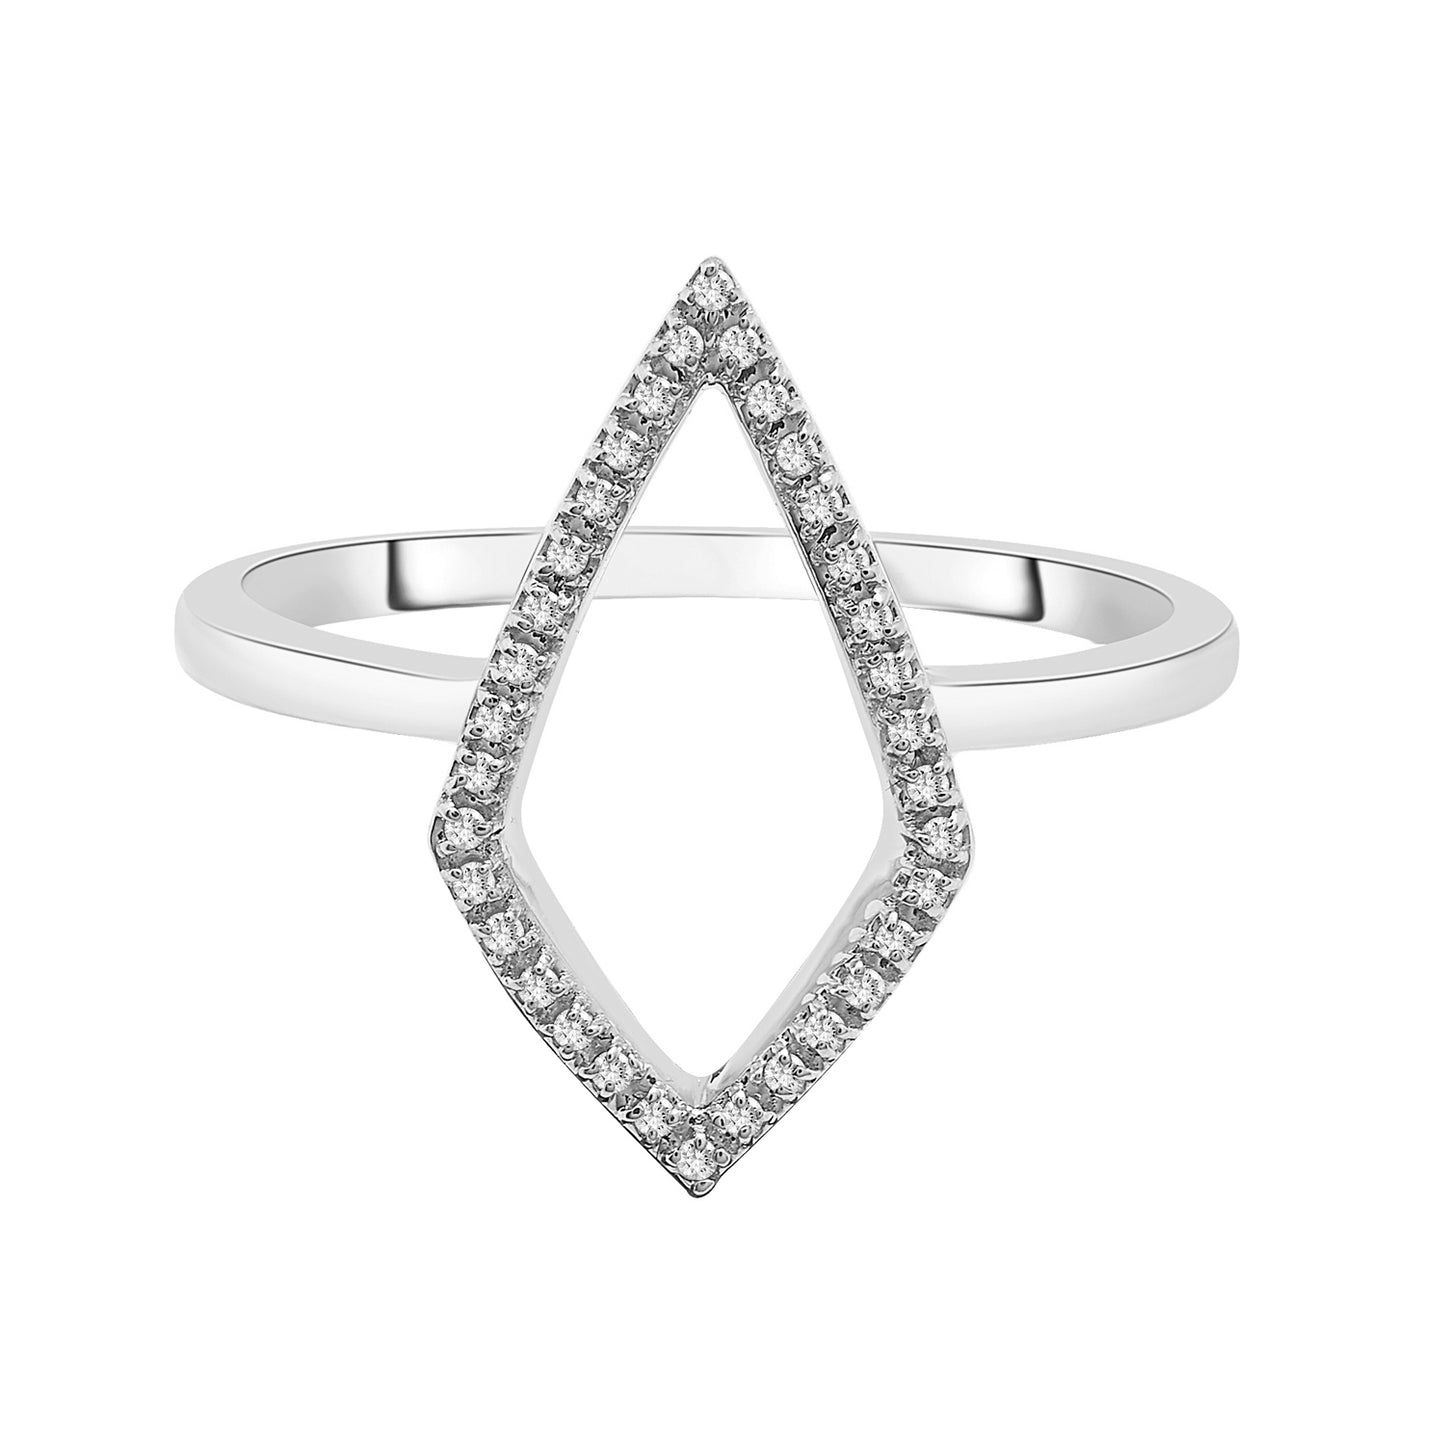 Rowan Open Shape Ring in White Gold with Diamonds